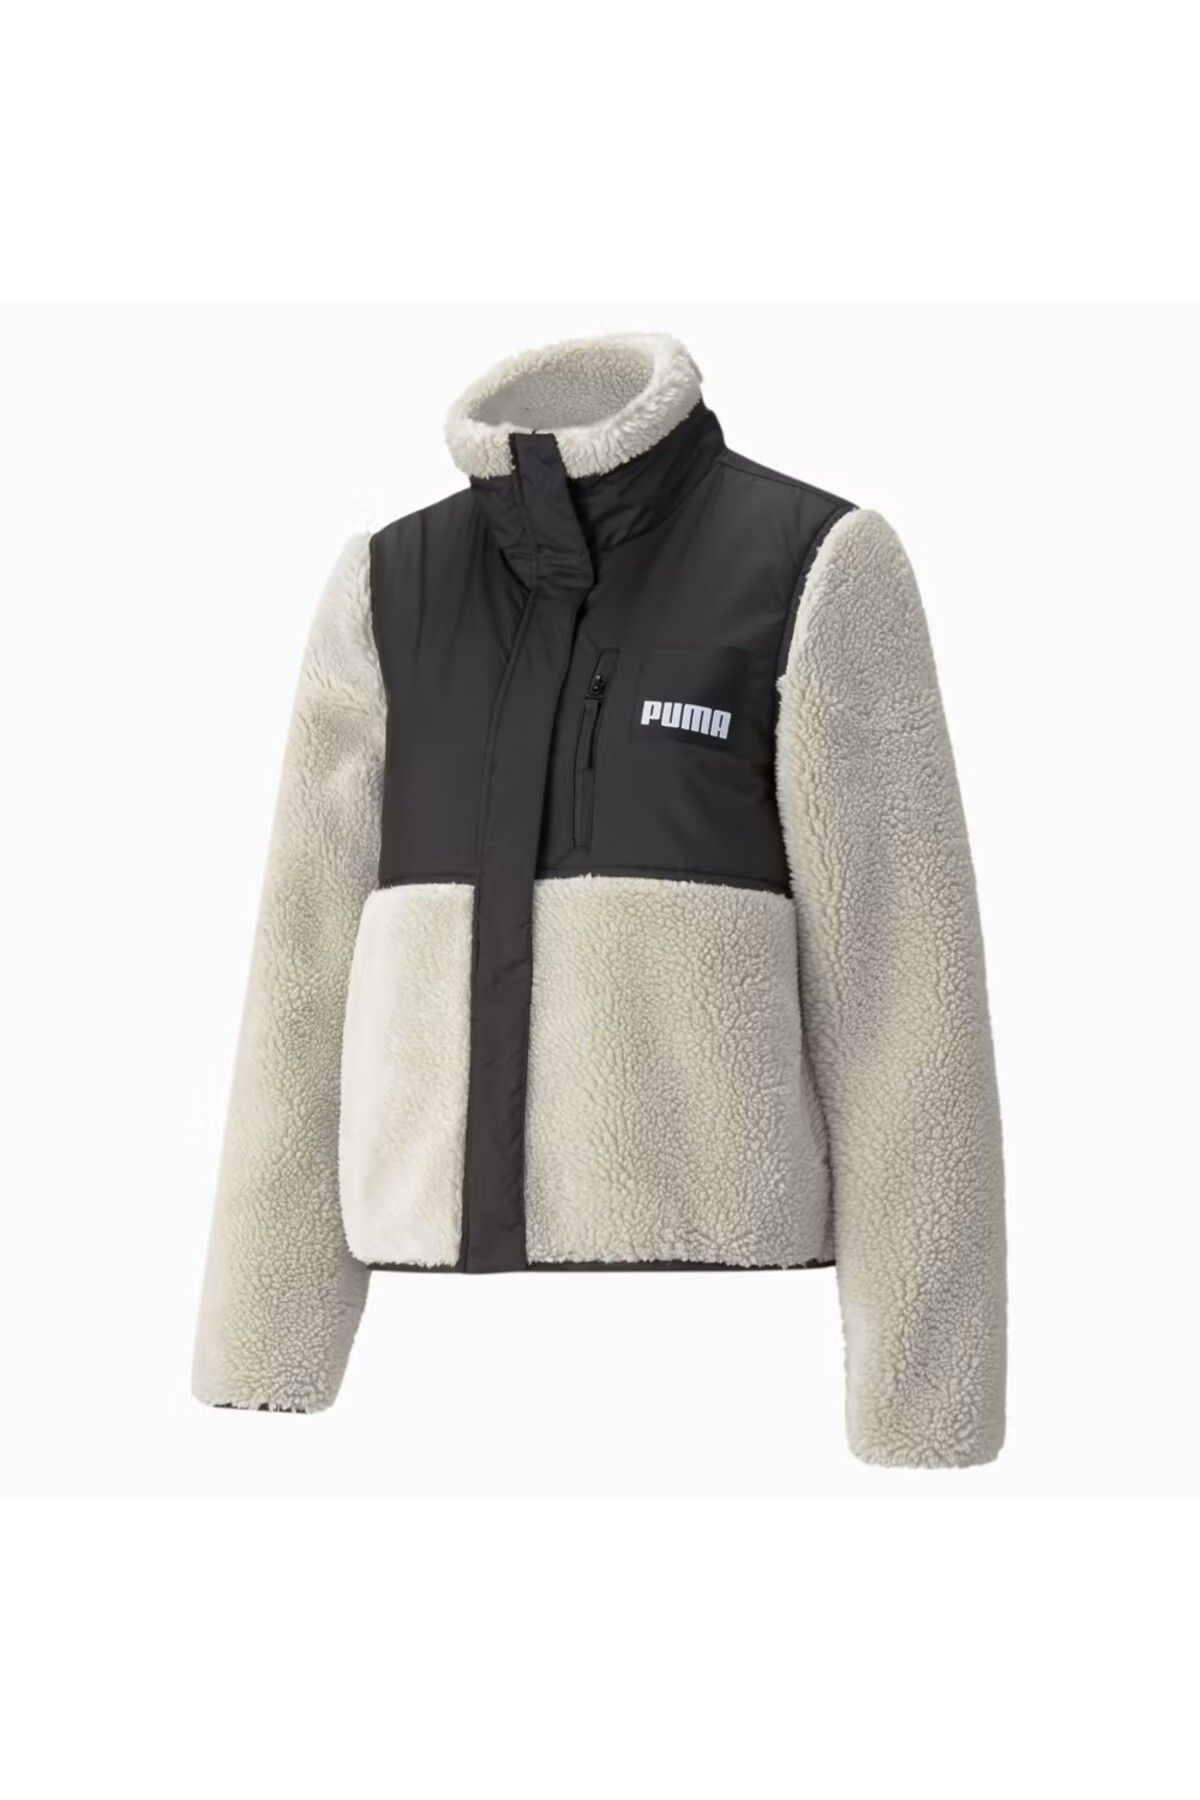 Puma Sherpa Hybrid Kadın Siyah-Beyaz Ceket 58772373